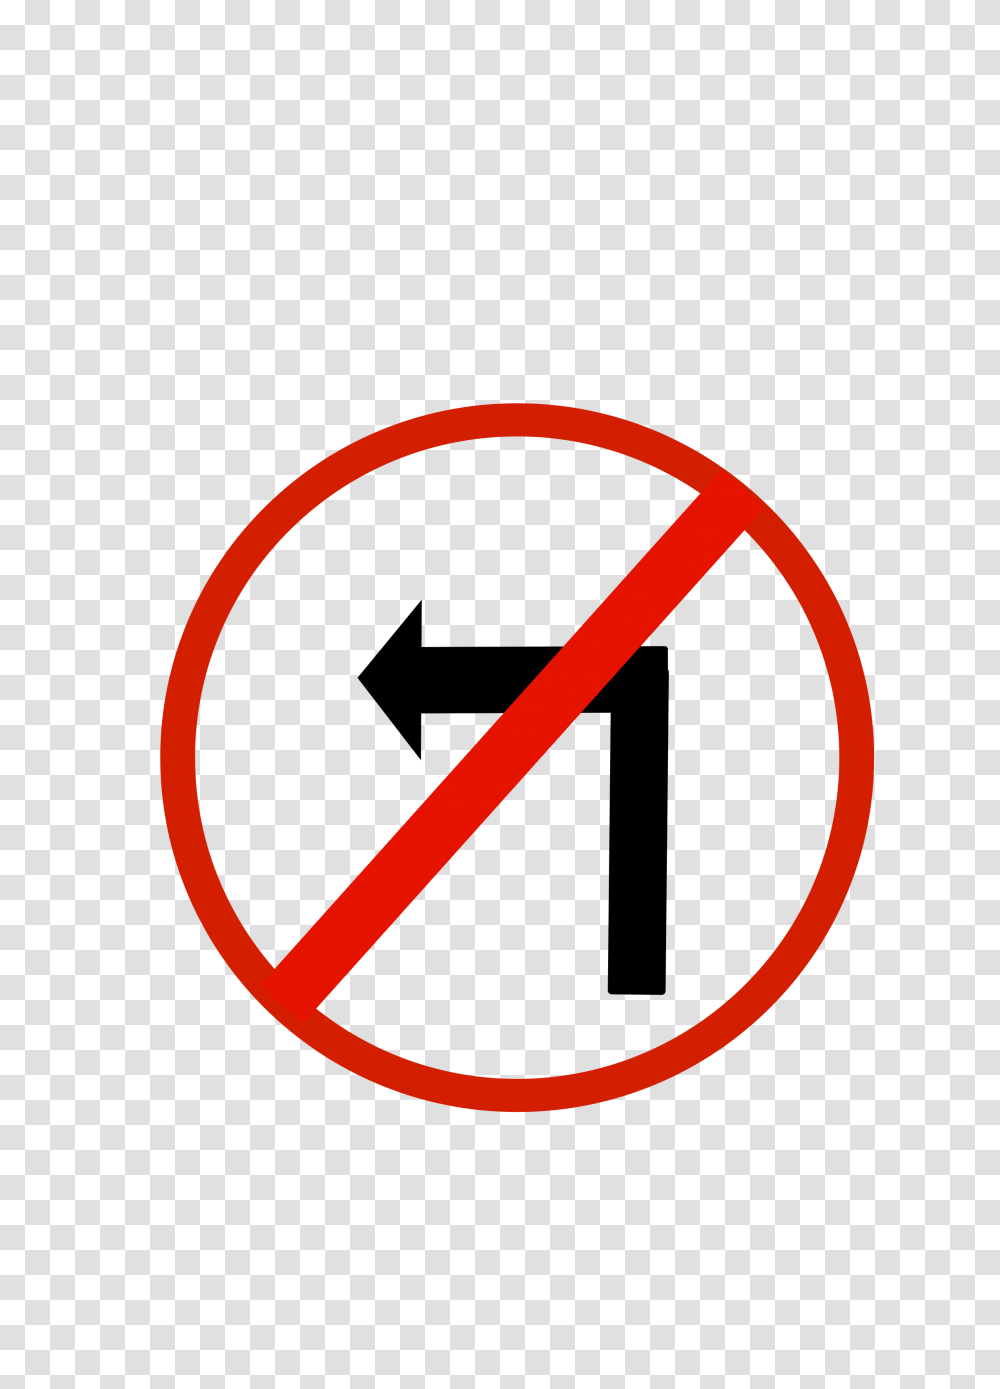 Indian Road Sign, Stopsign Transparent Png